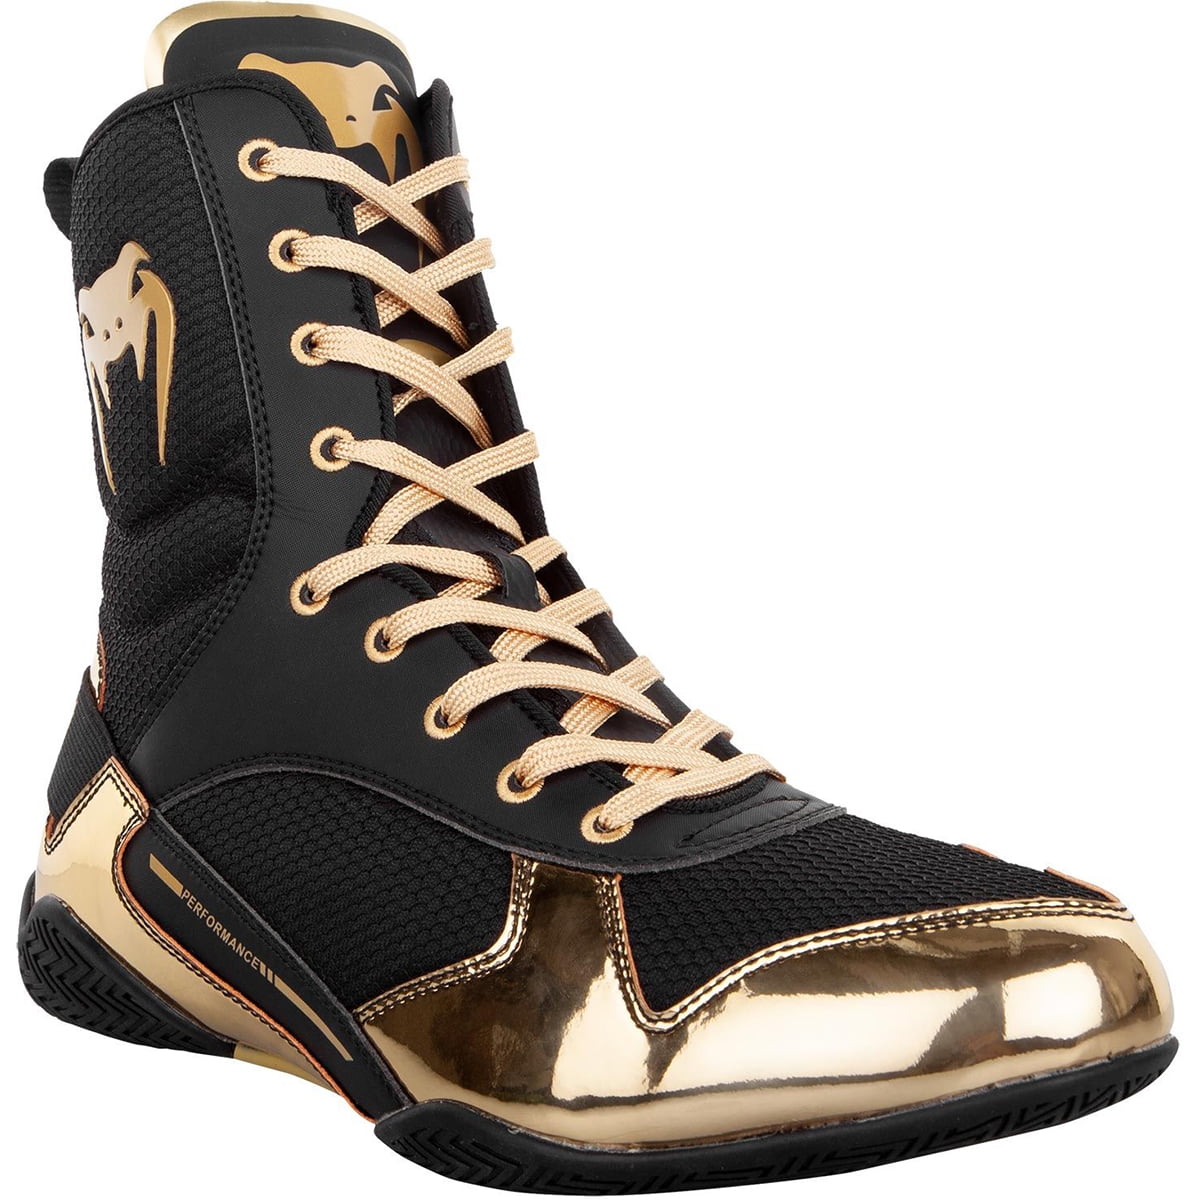 Venum Elite Professional Boxing Shoes - 7 - Black/Gold - Walmart.com